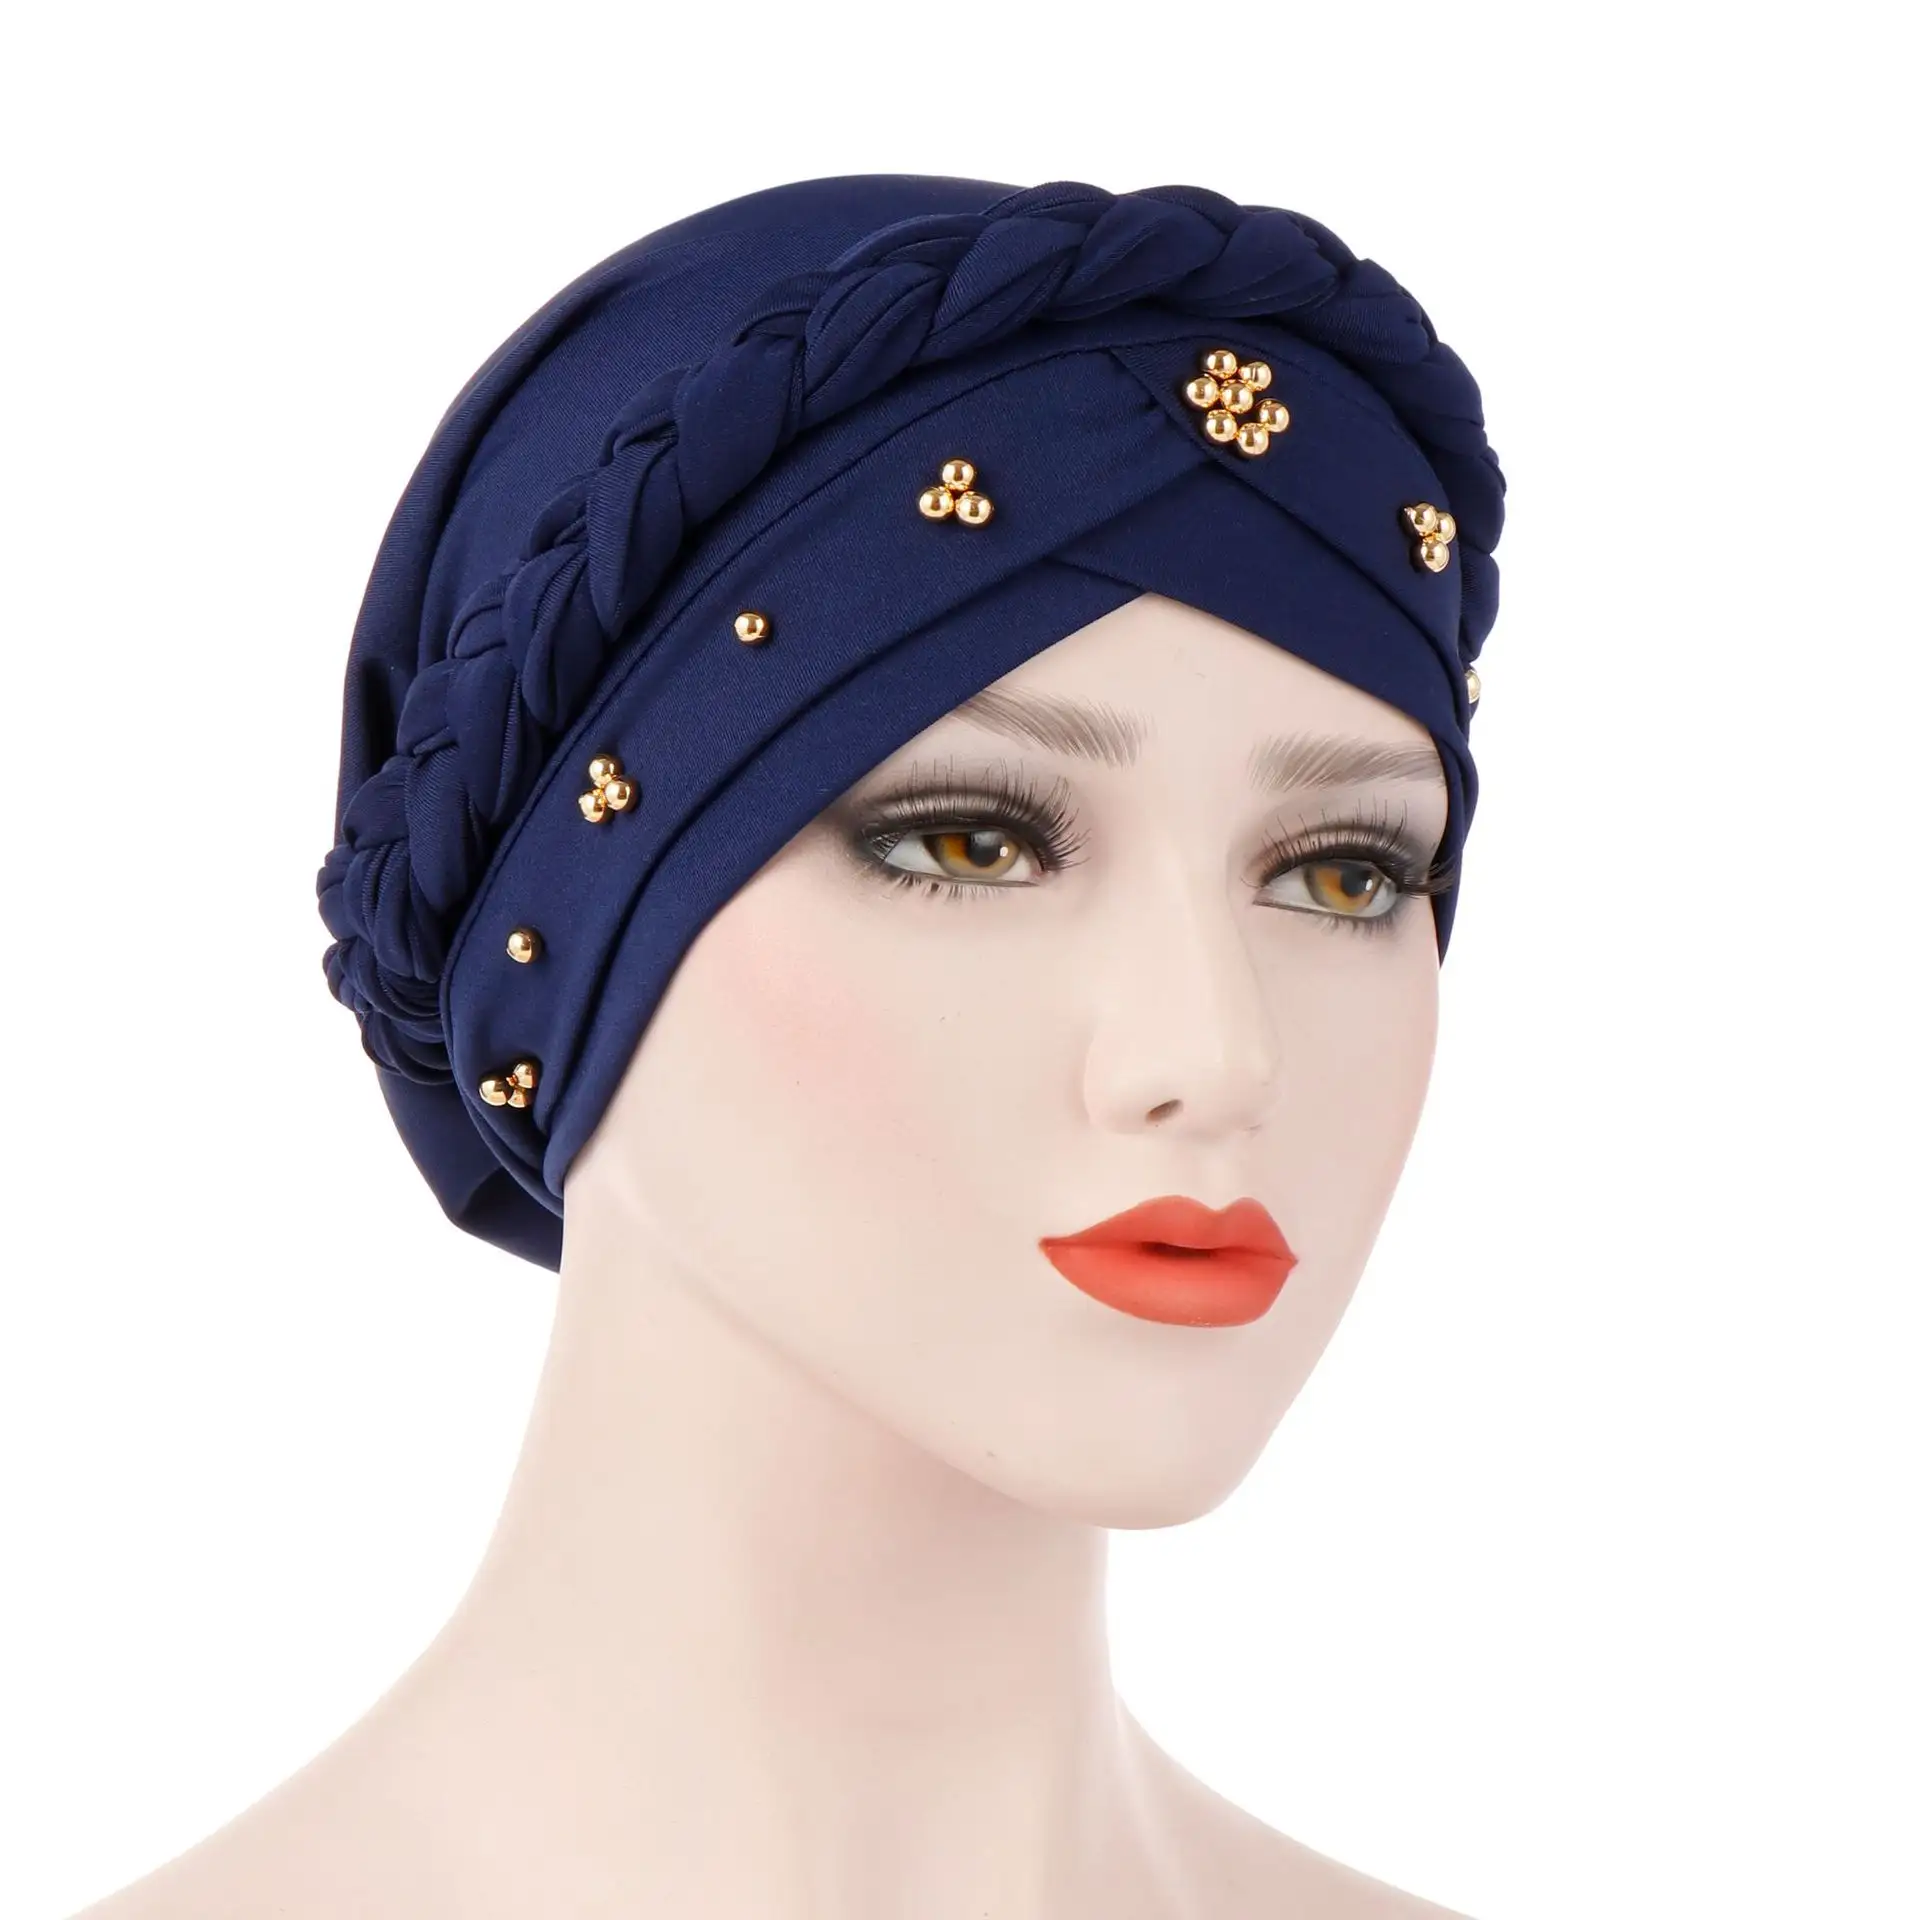 2020 Fashion Design Women Headband Turban Hat Middle East Countries Muslim Beads India Turban